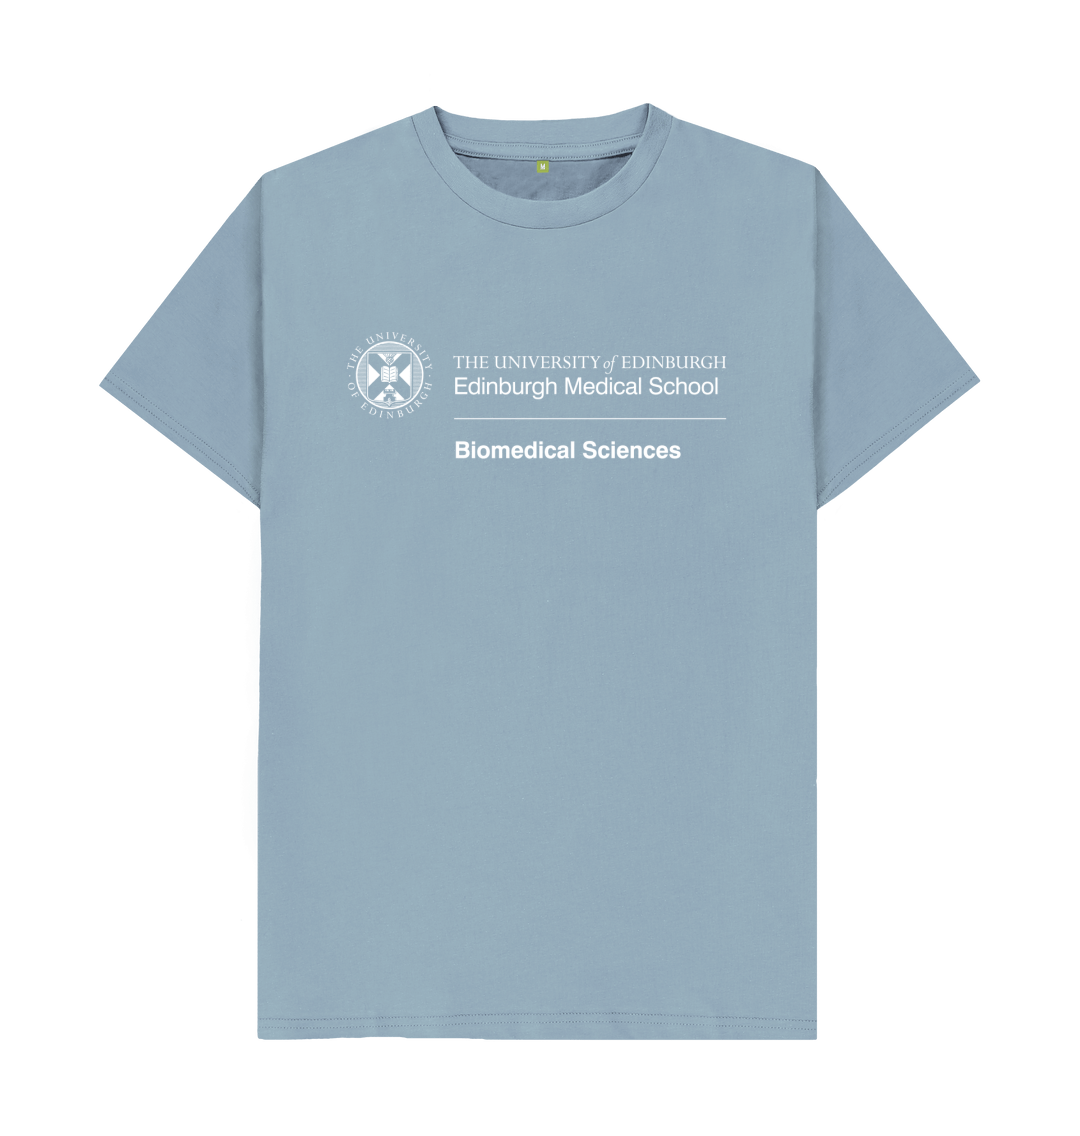 Edinburgh Medical School - Biomedical Sciences T-Shirt